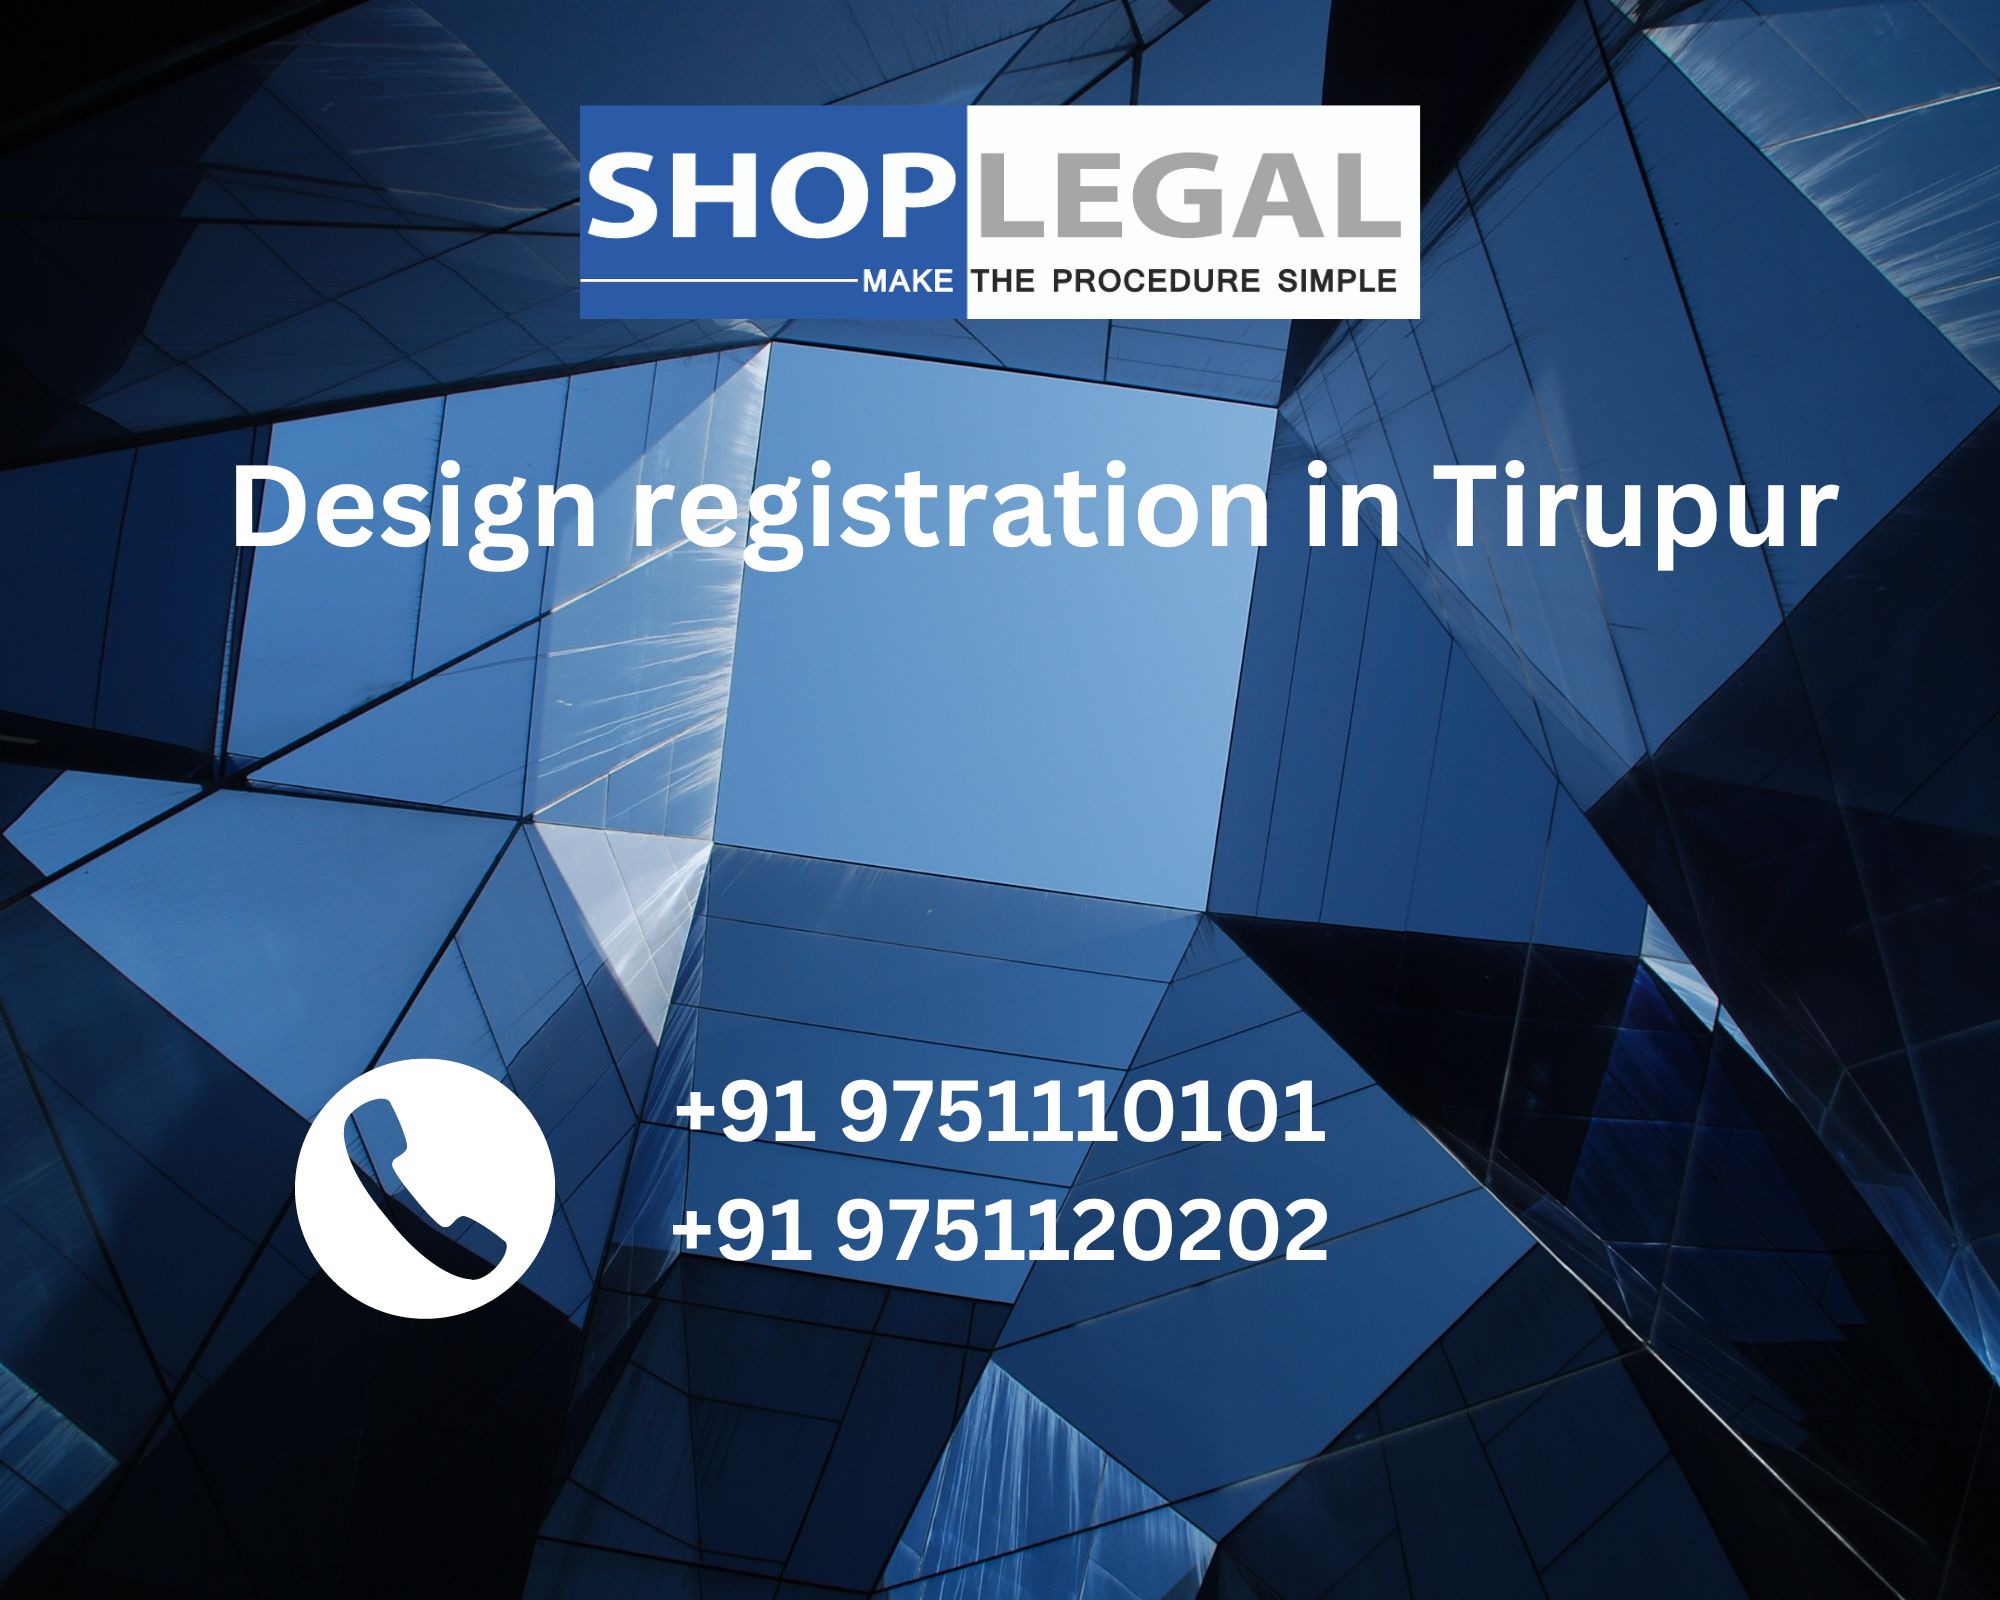 Design registration in Tirupur